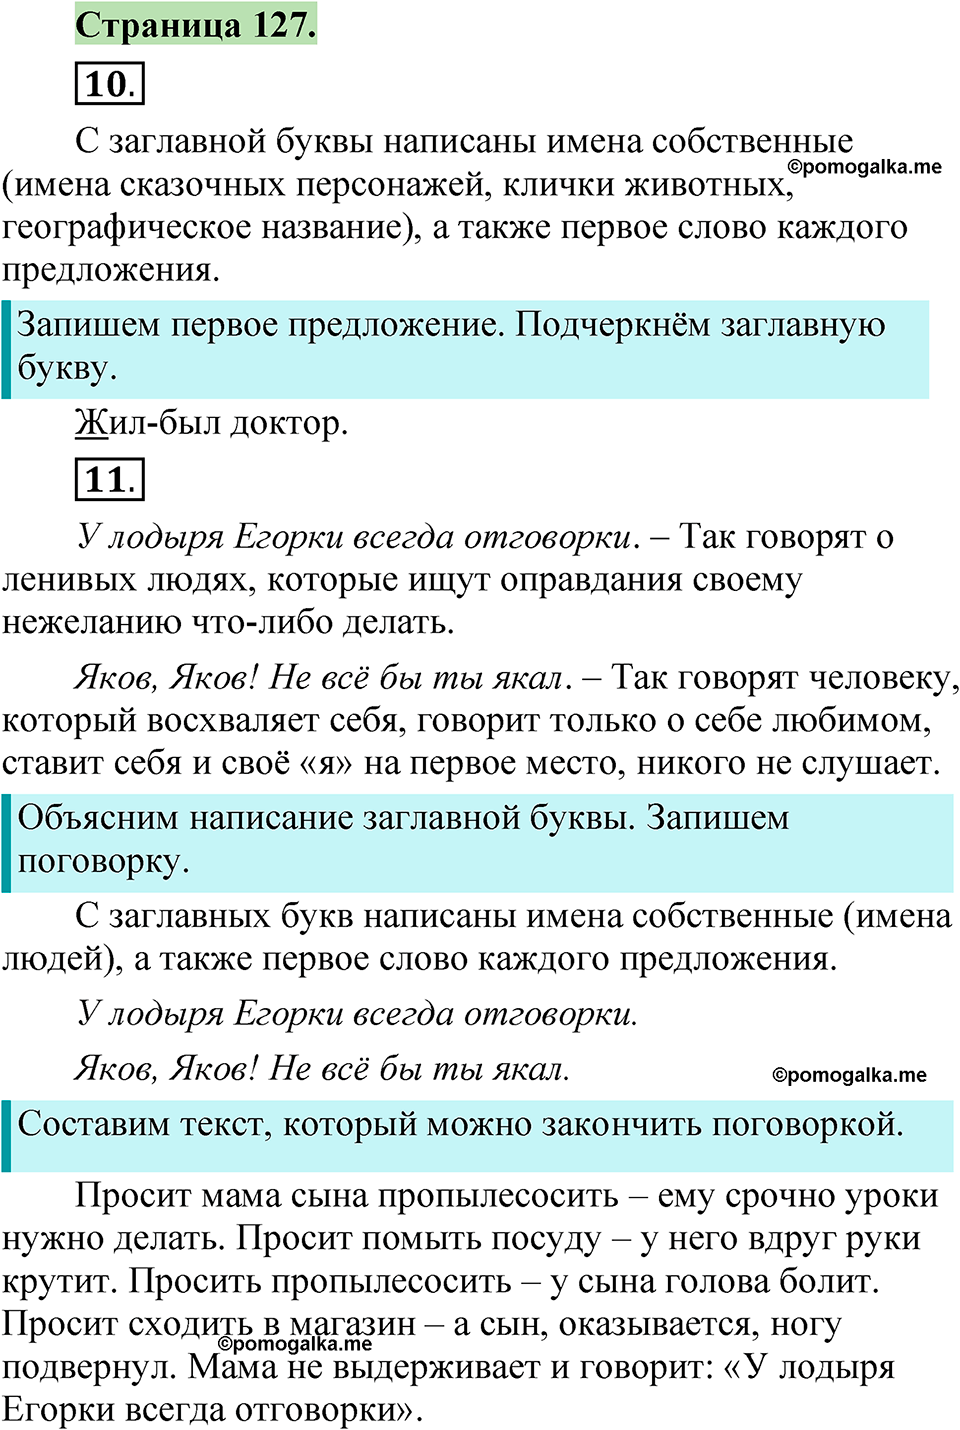 страница 127 русский язык 1 класс Канакина 2023